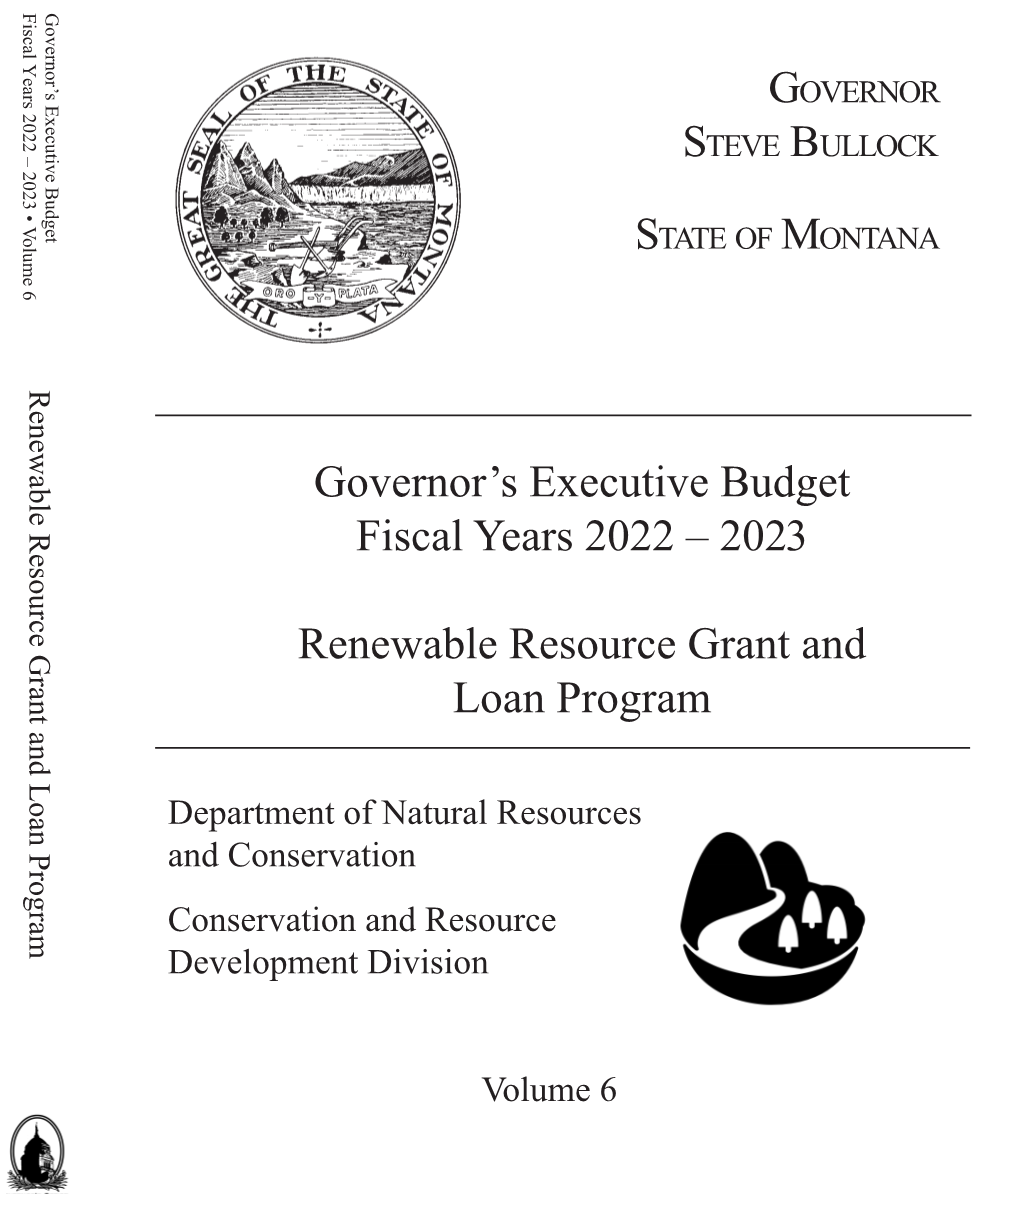 2023 Renewable Resource Grant and Loan Program